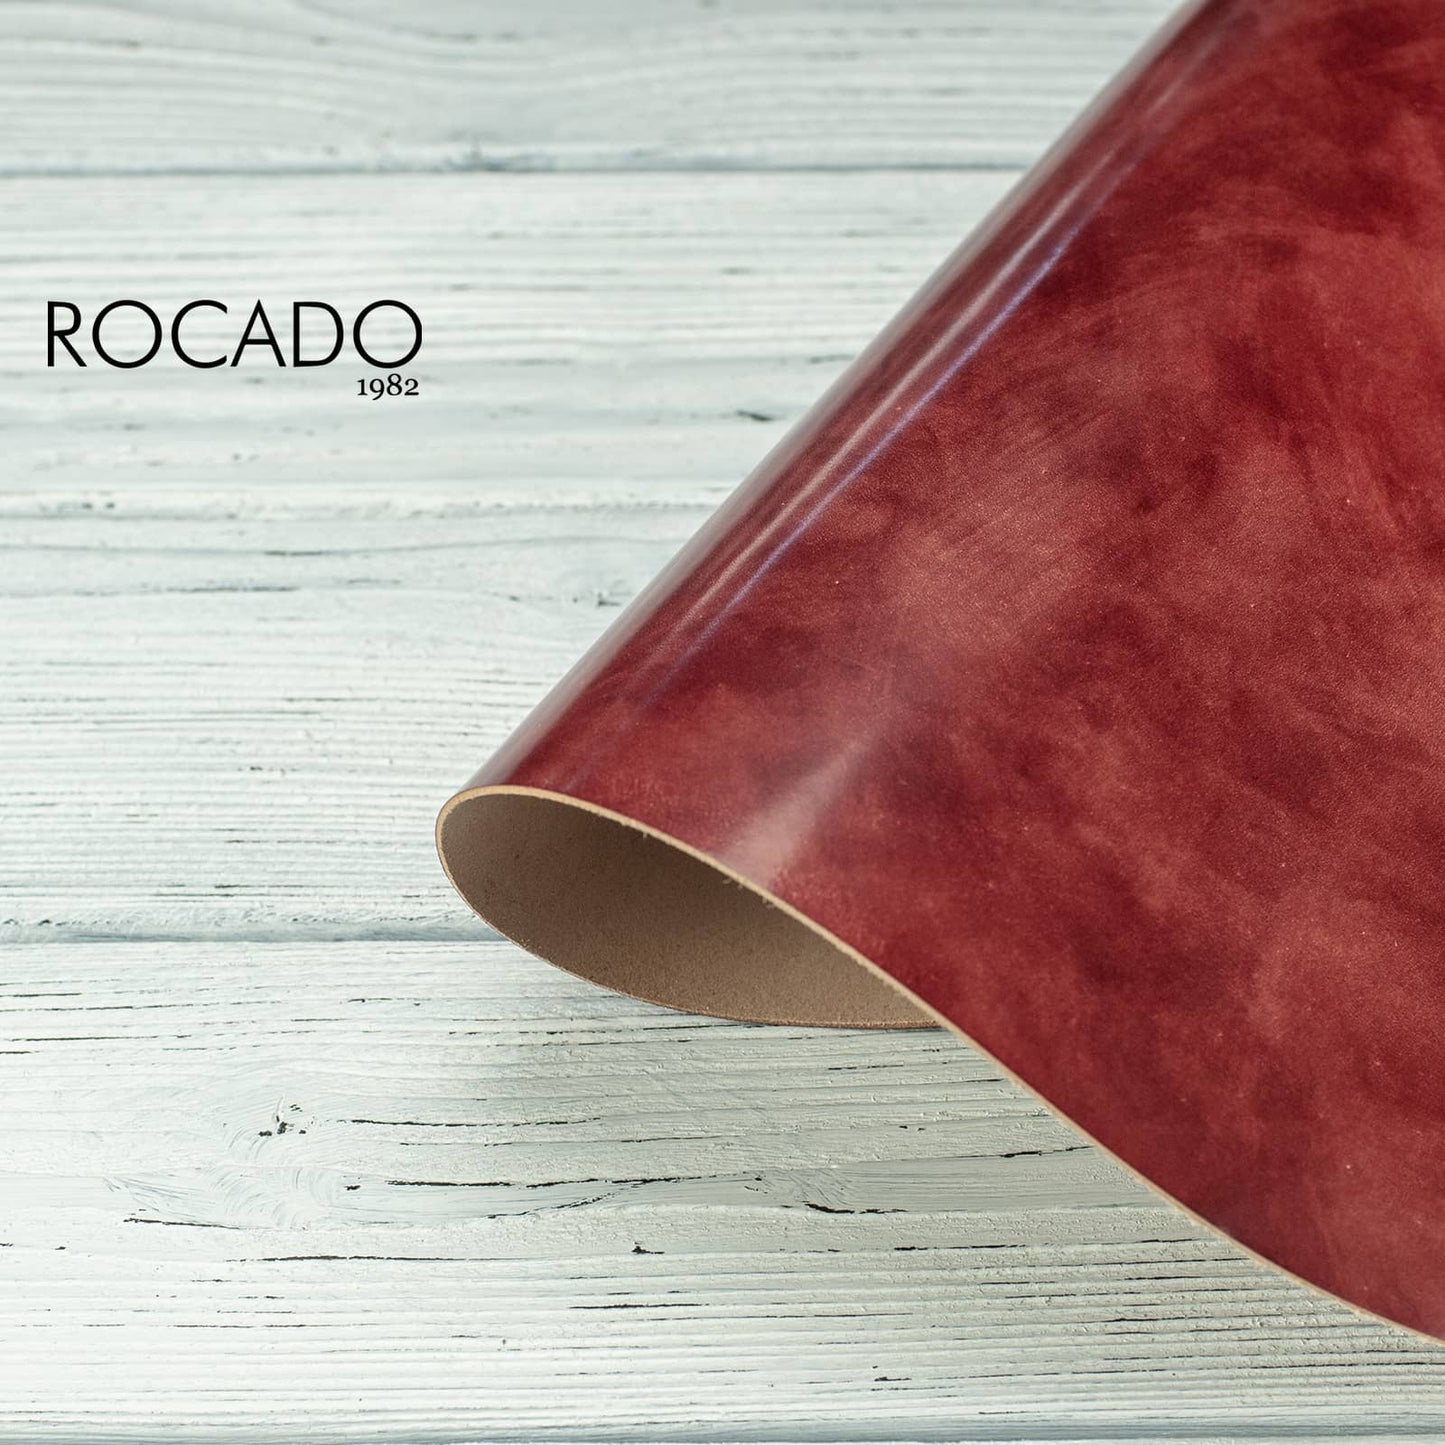 Rocado Museum - Red